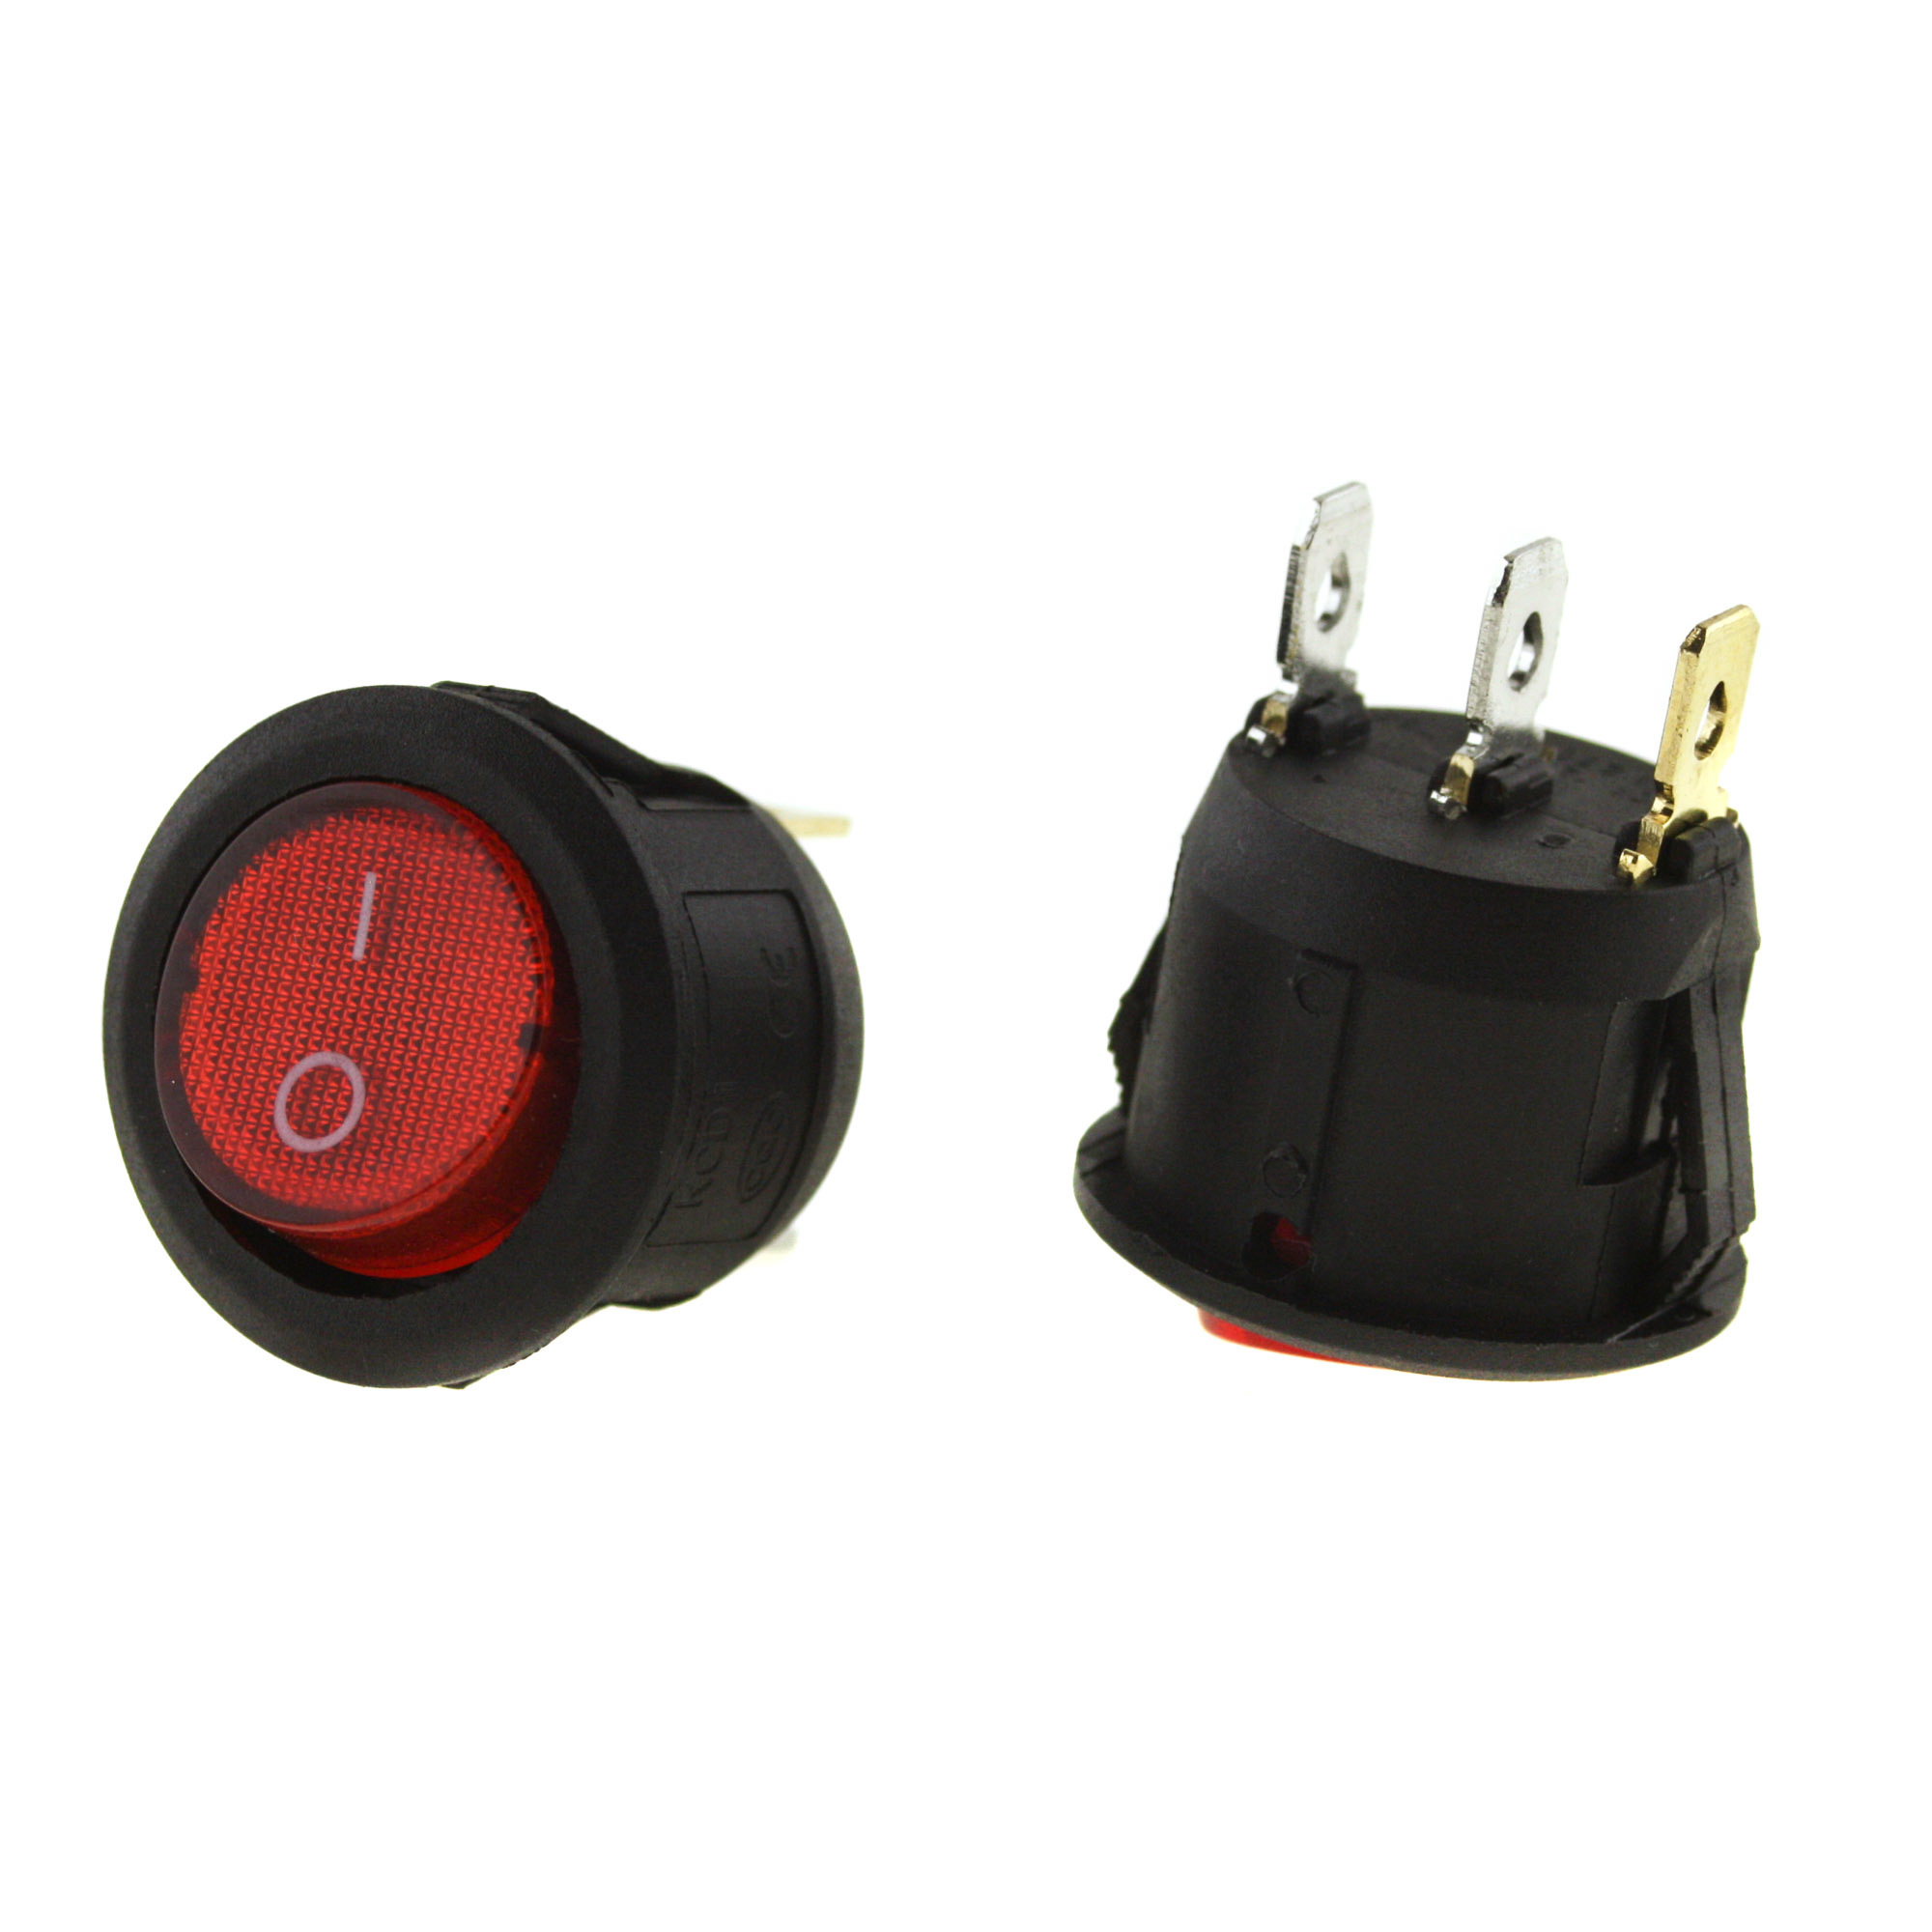 Switch I-0 250V 6A, 23mm, round, red